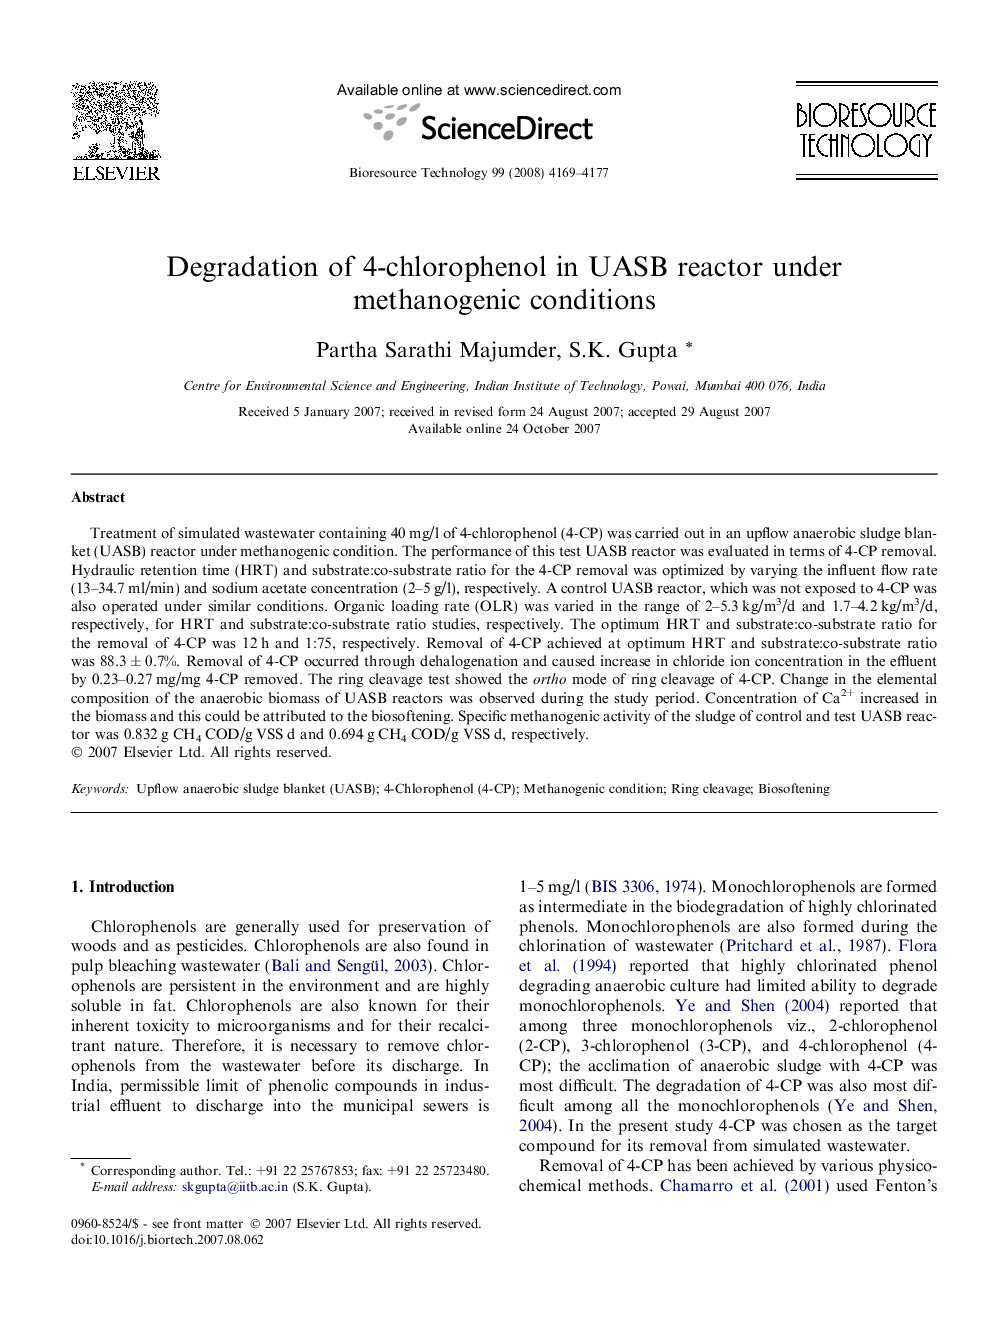 Degradation of 4-chlorophenol in UASB reactor under methanogenic conditions